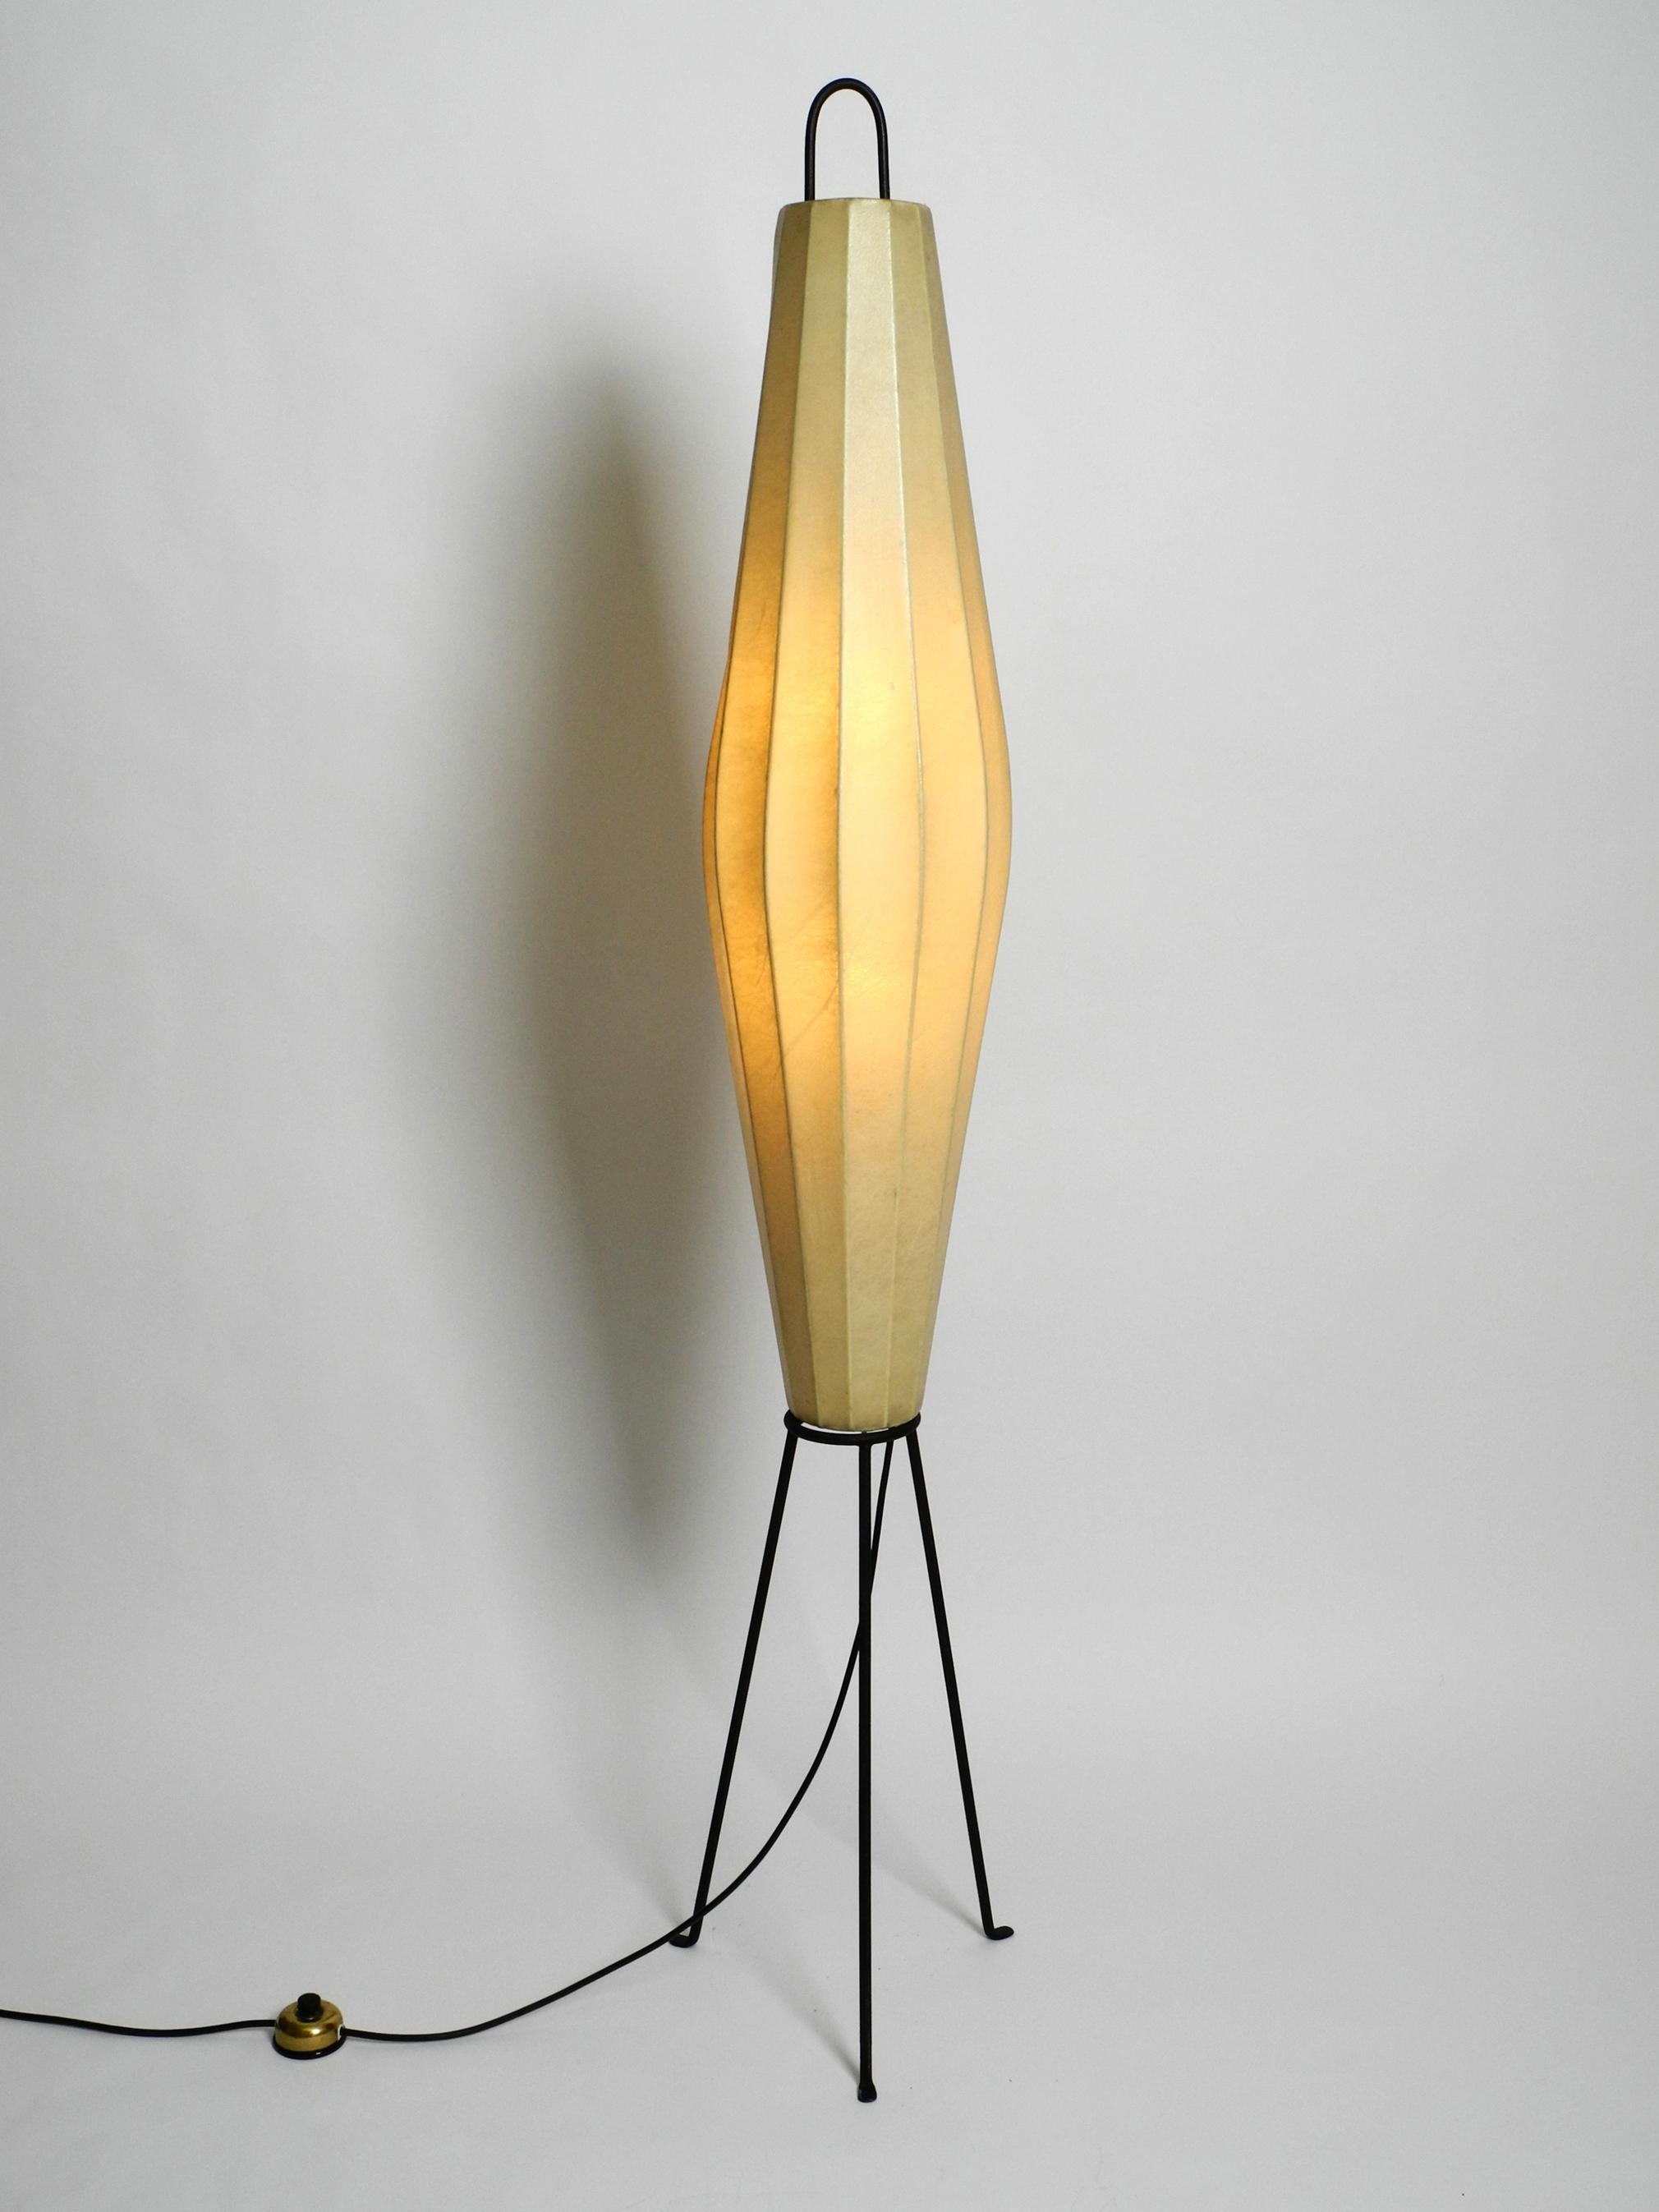 German Extra Large Mid-Century Modern Tripod Cocoon Floor Lamp, Vereinigten Werkstätten